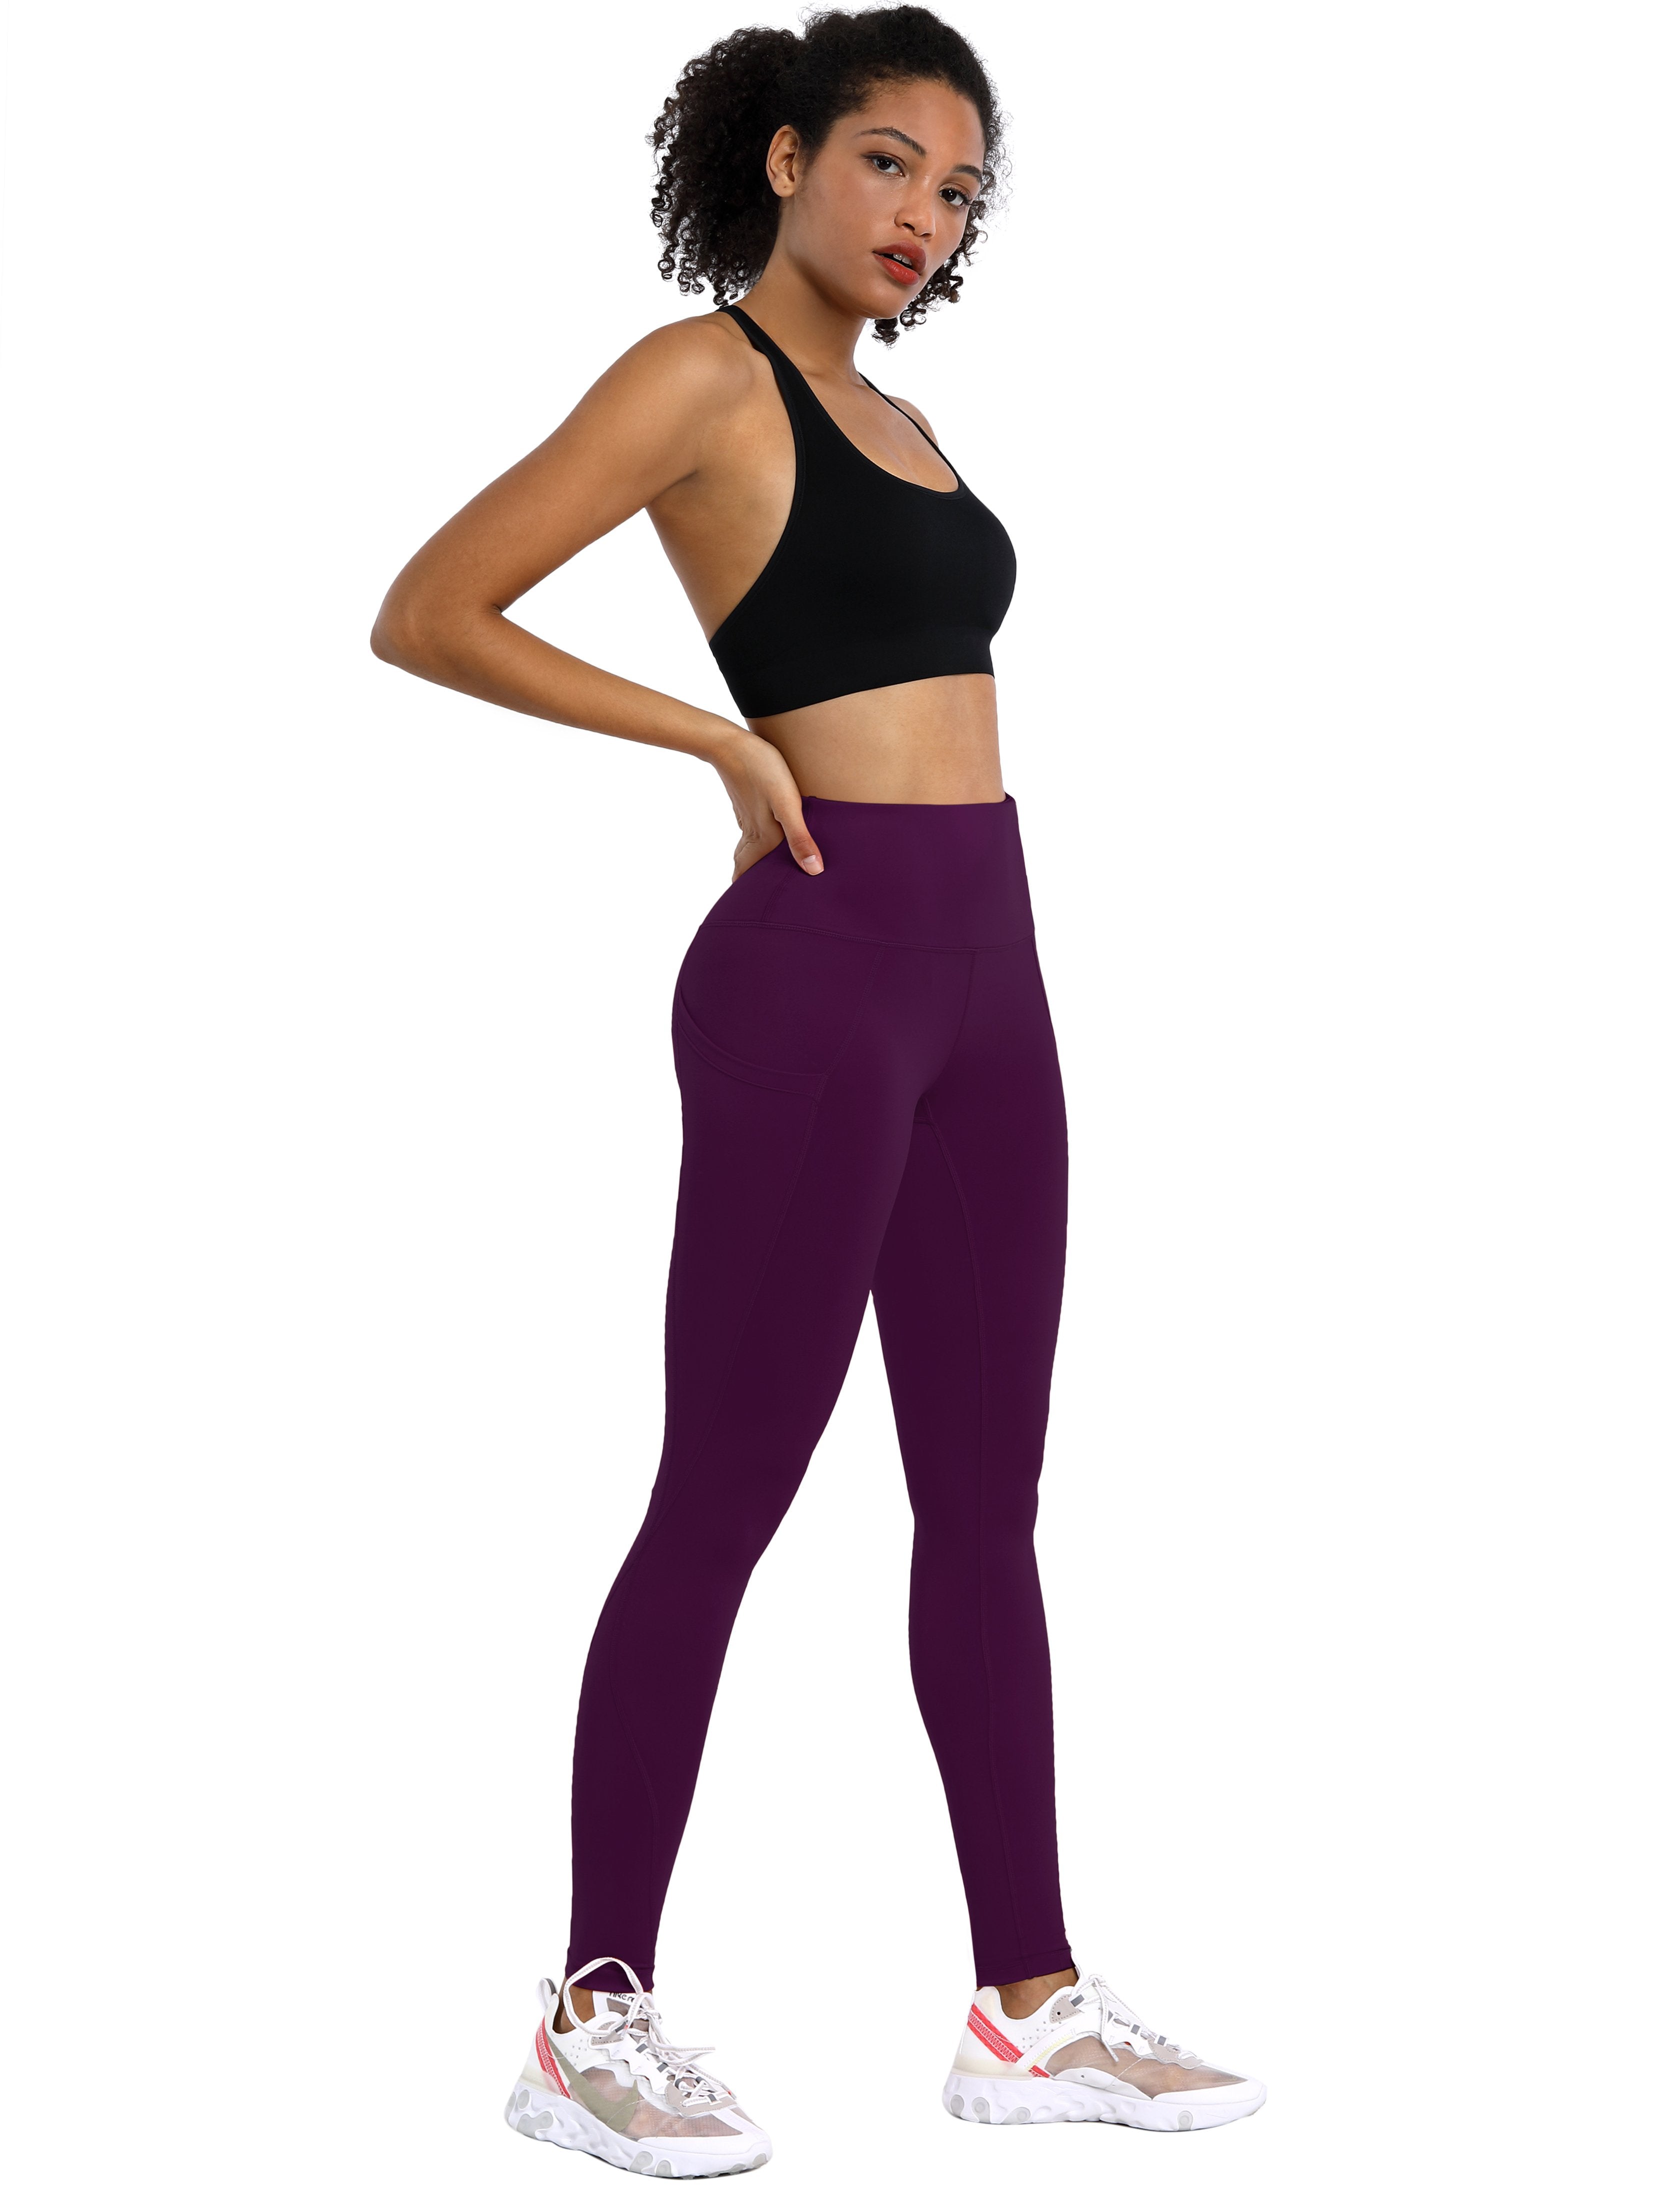 Apana Plum Yoga Pants, Size XS, Poly/Spandex, Lightly Used